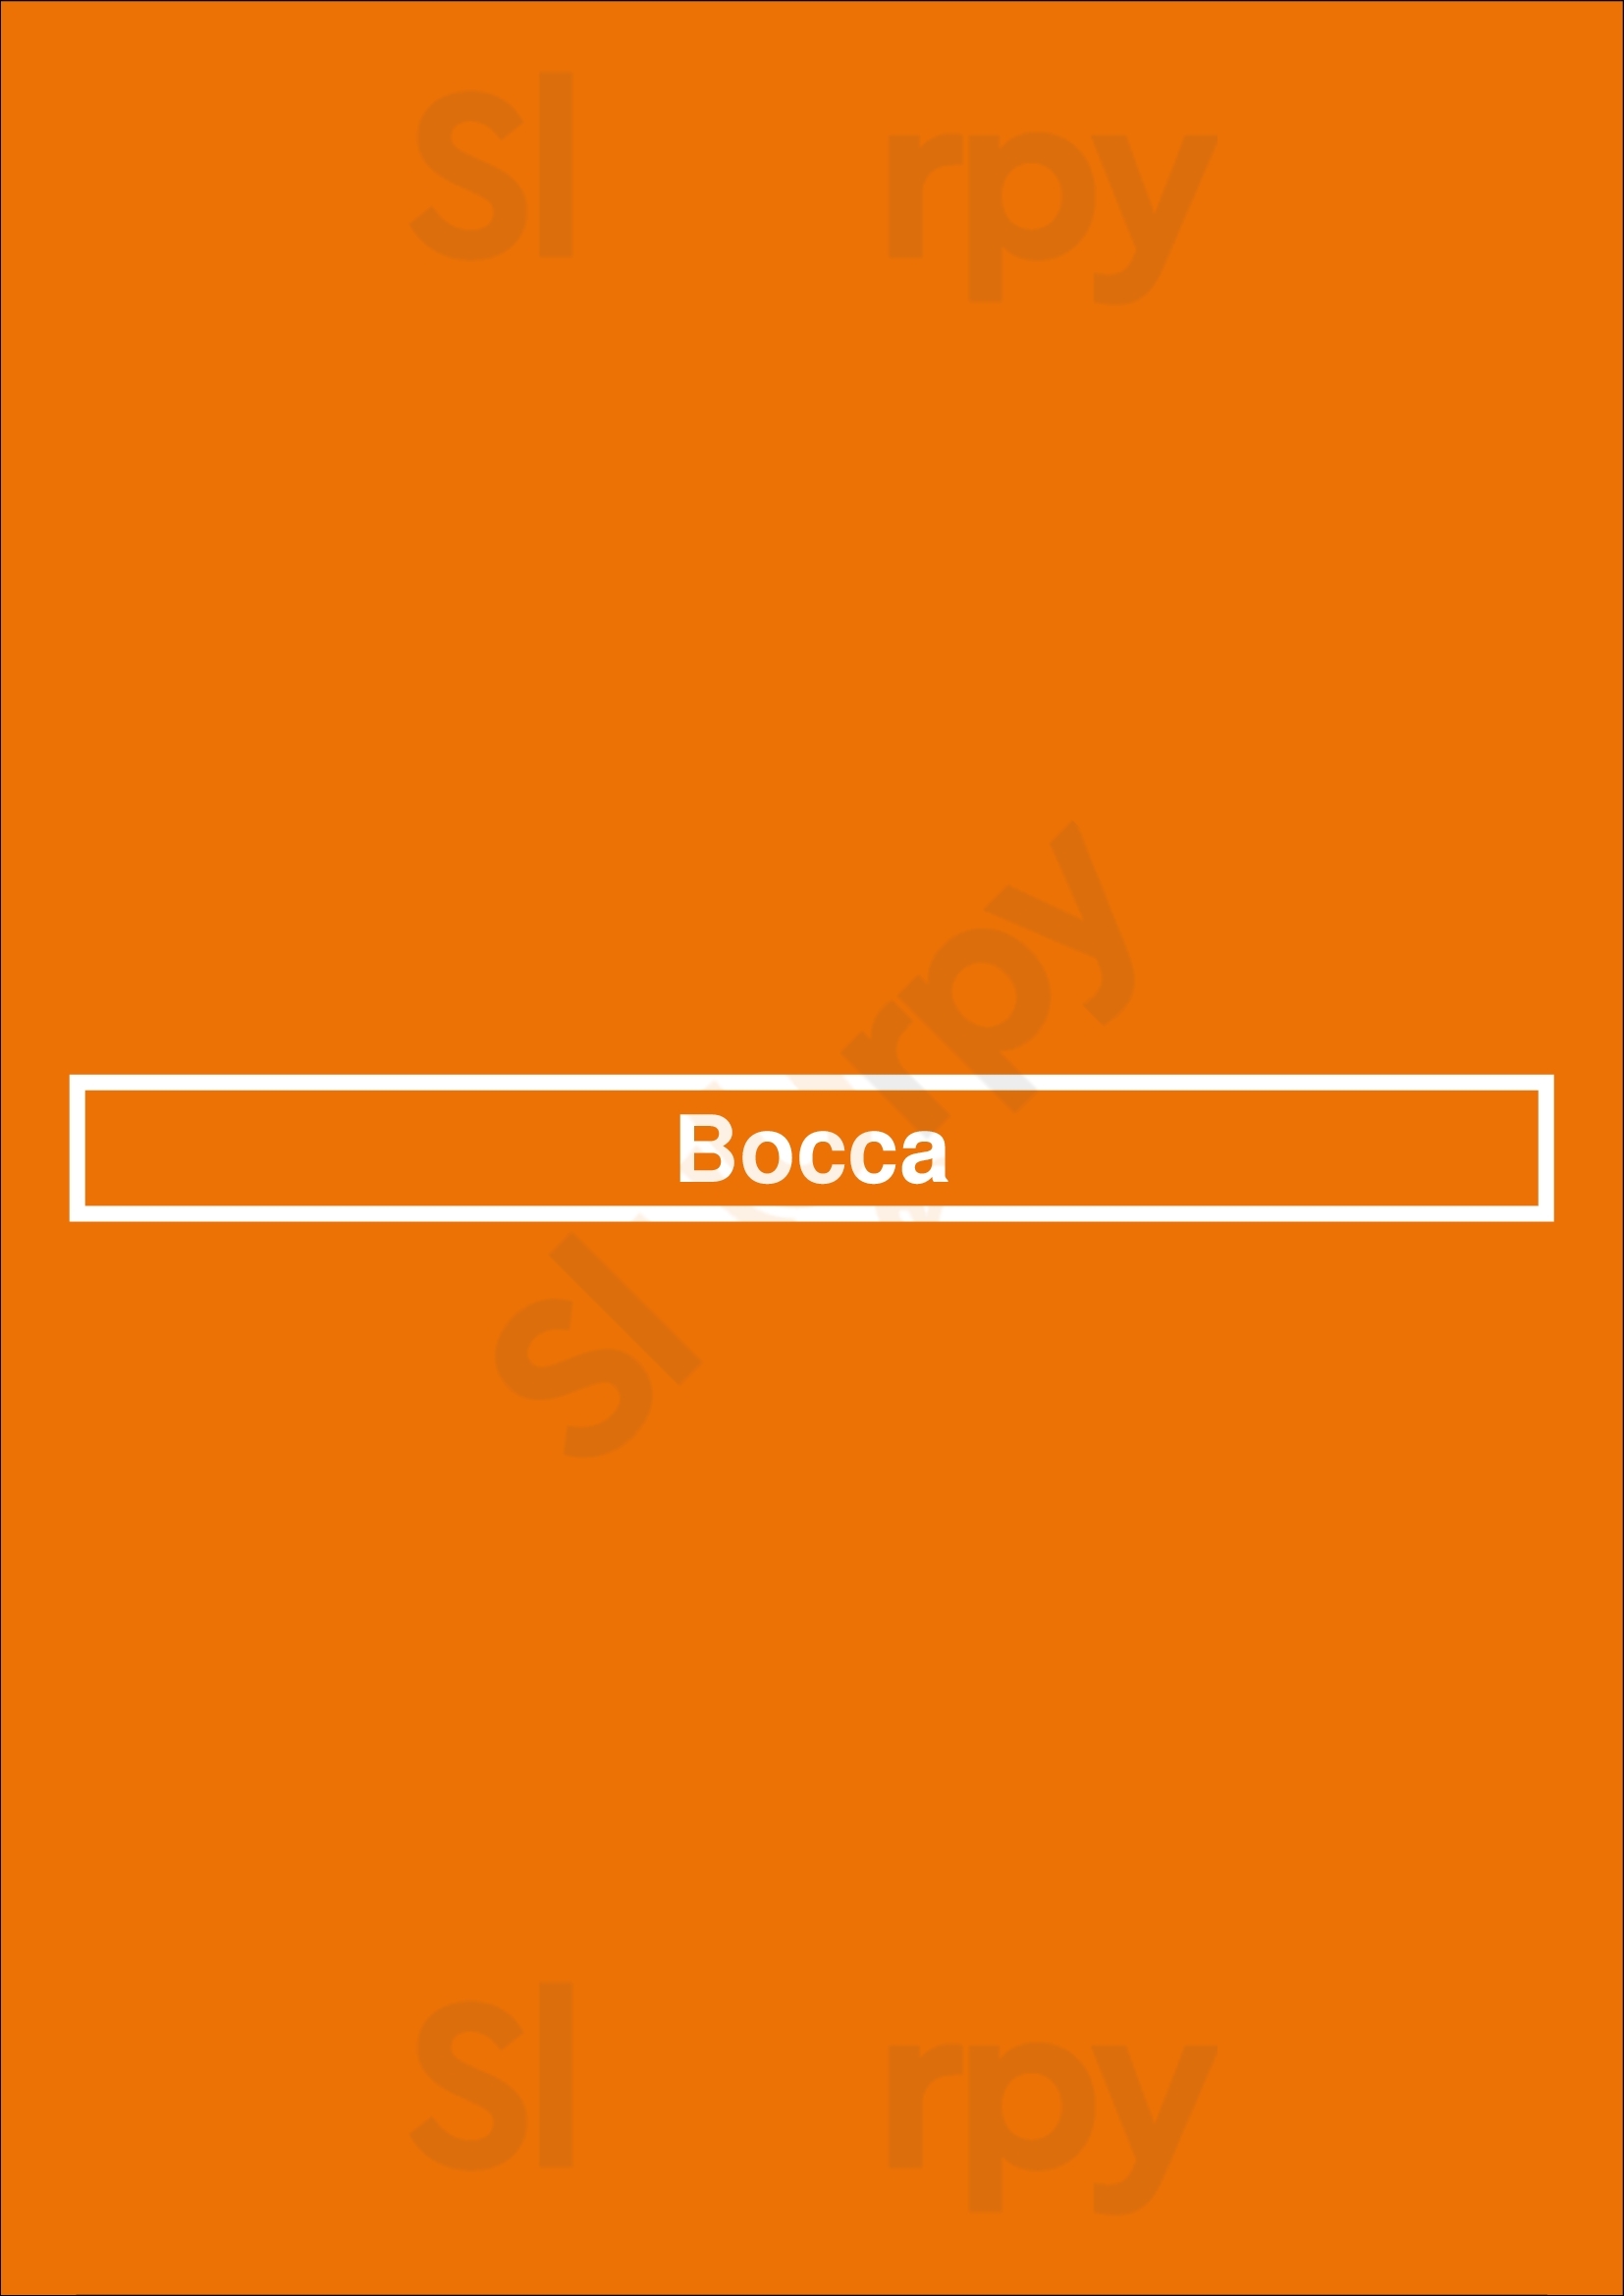 Restaurant Bocca Laken Menu - 1